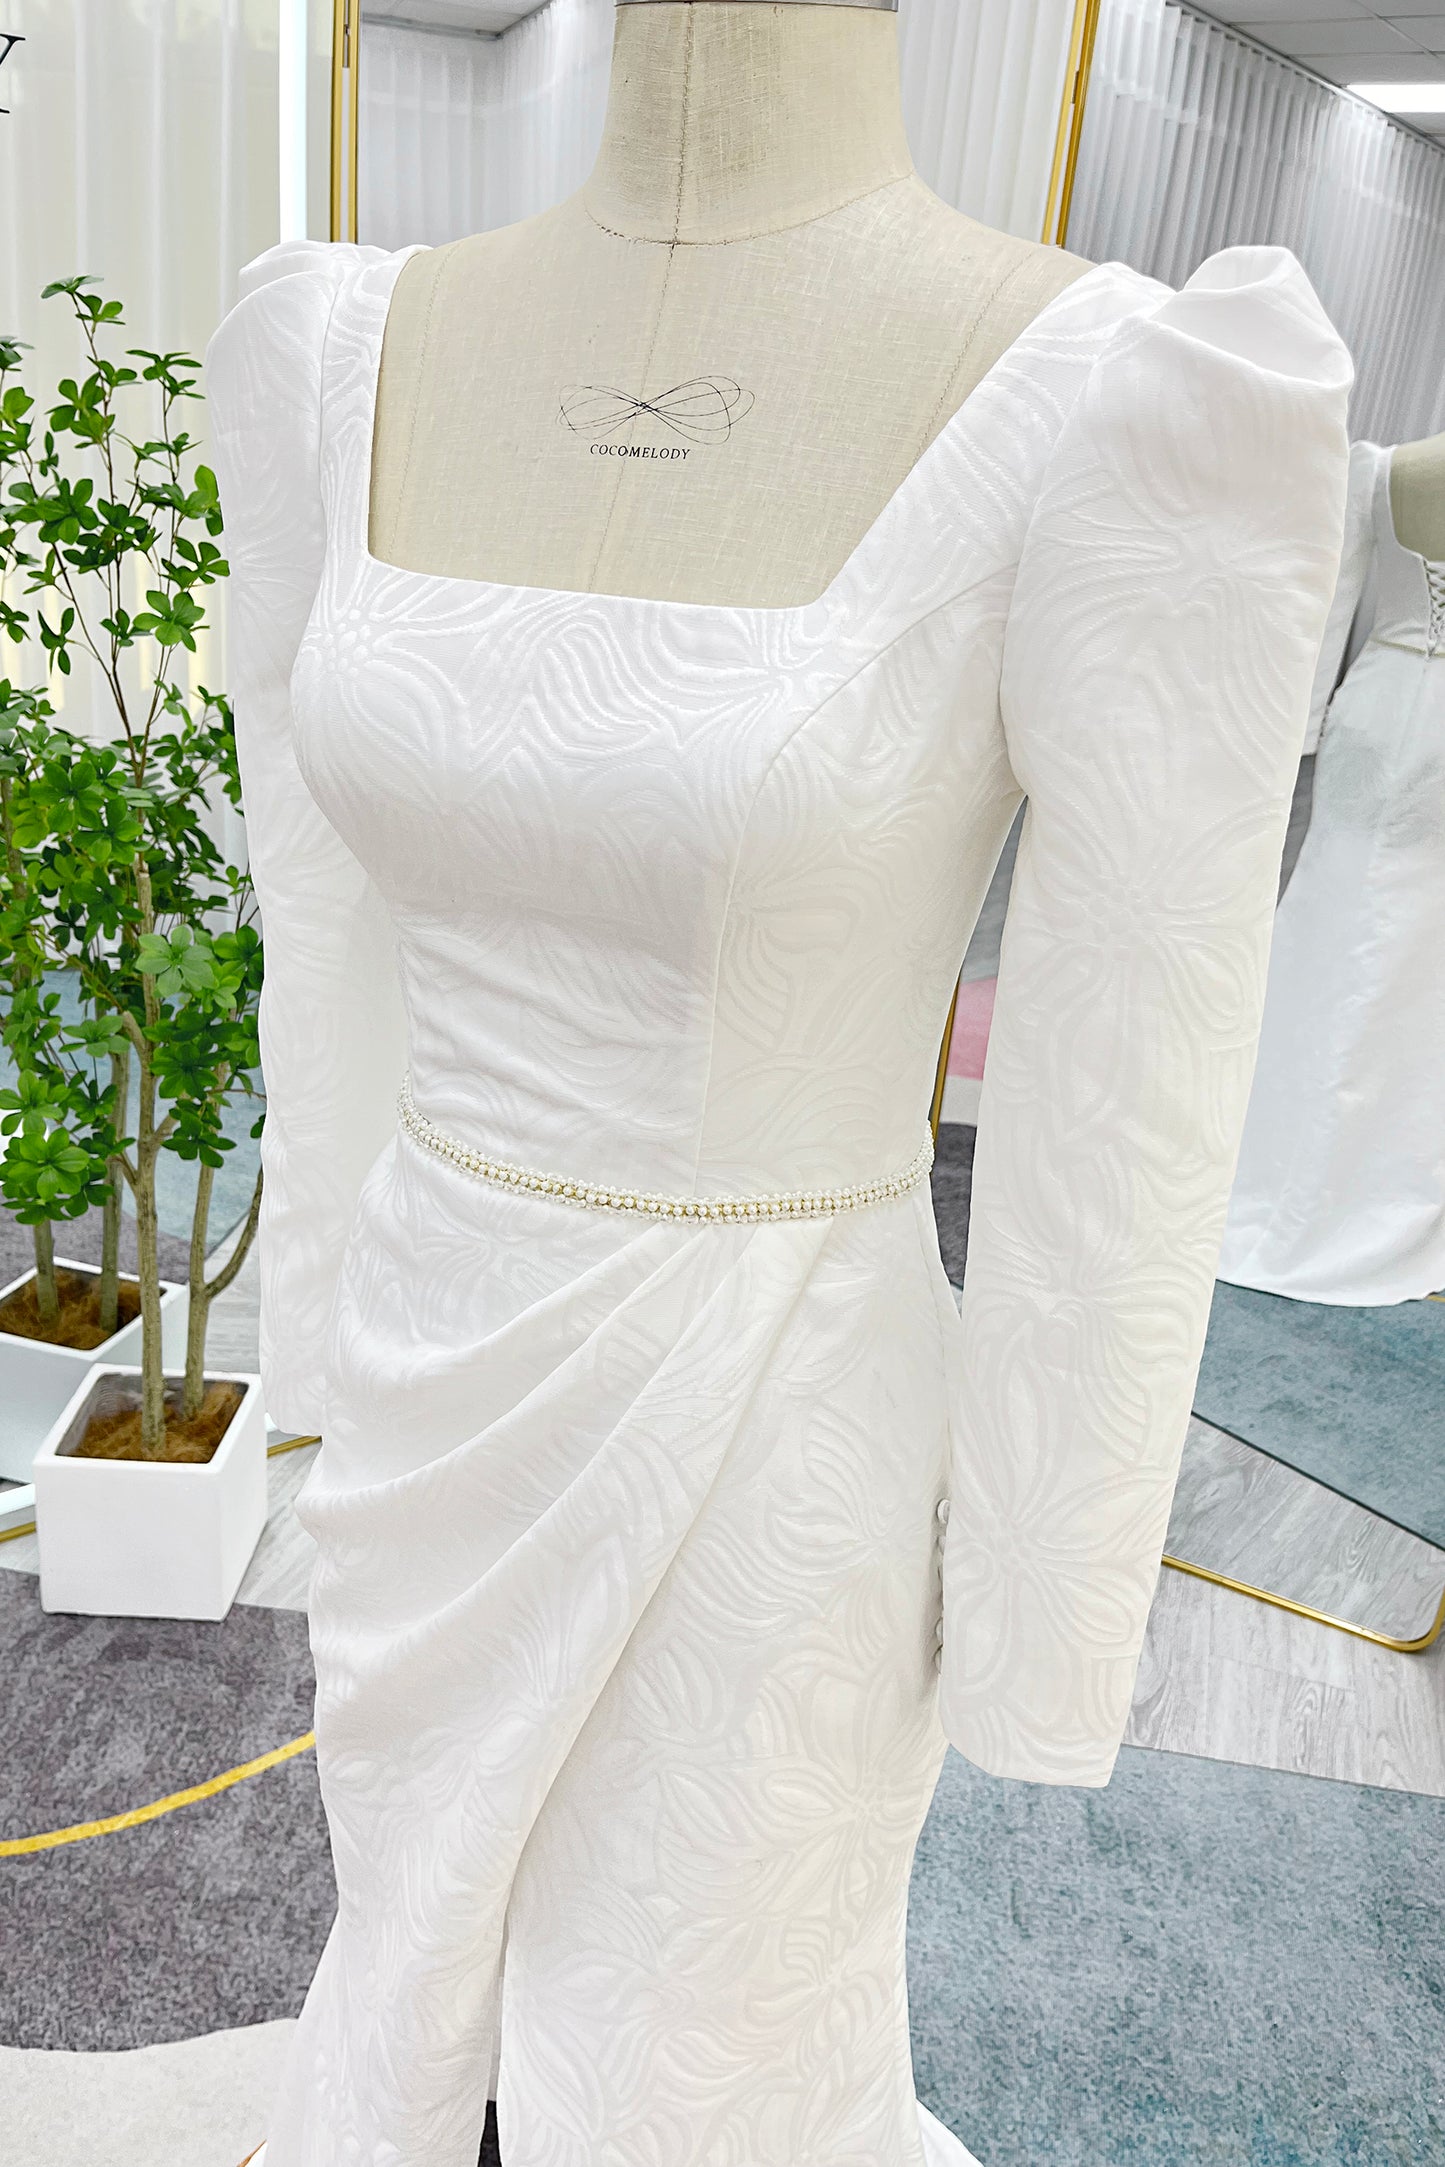 Mermaid Sweep-Brush Train Jacquard Satin Wedding Dress CW3284